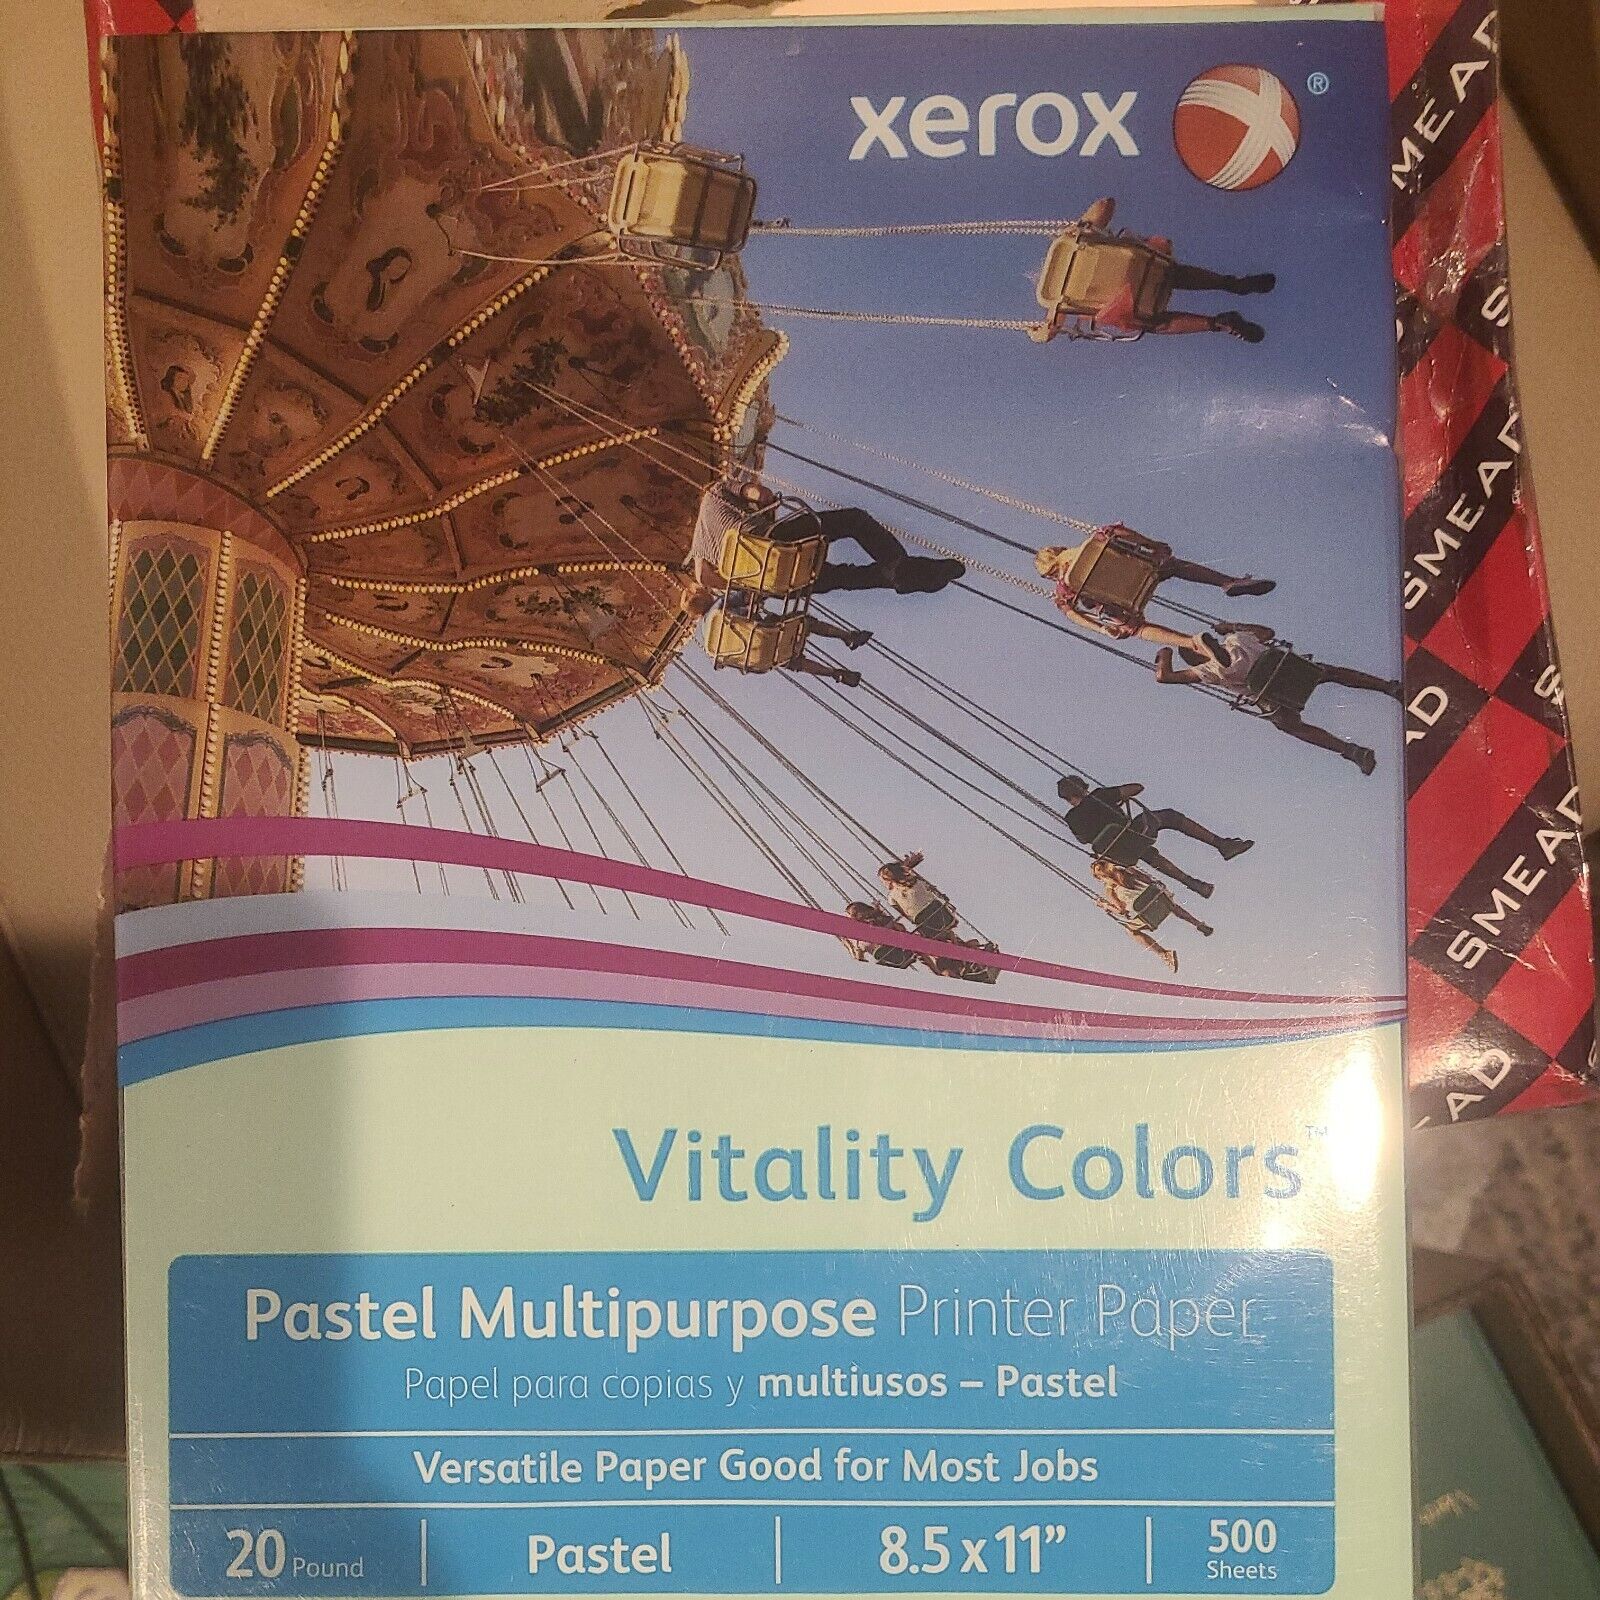 Xerox Vitality Colors Multi-Use Printer Paper 1 ream, 500 sheets